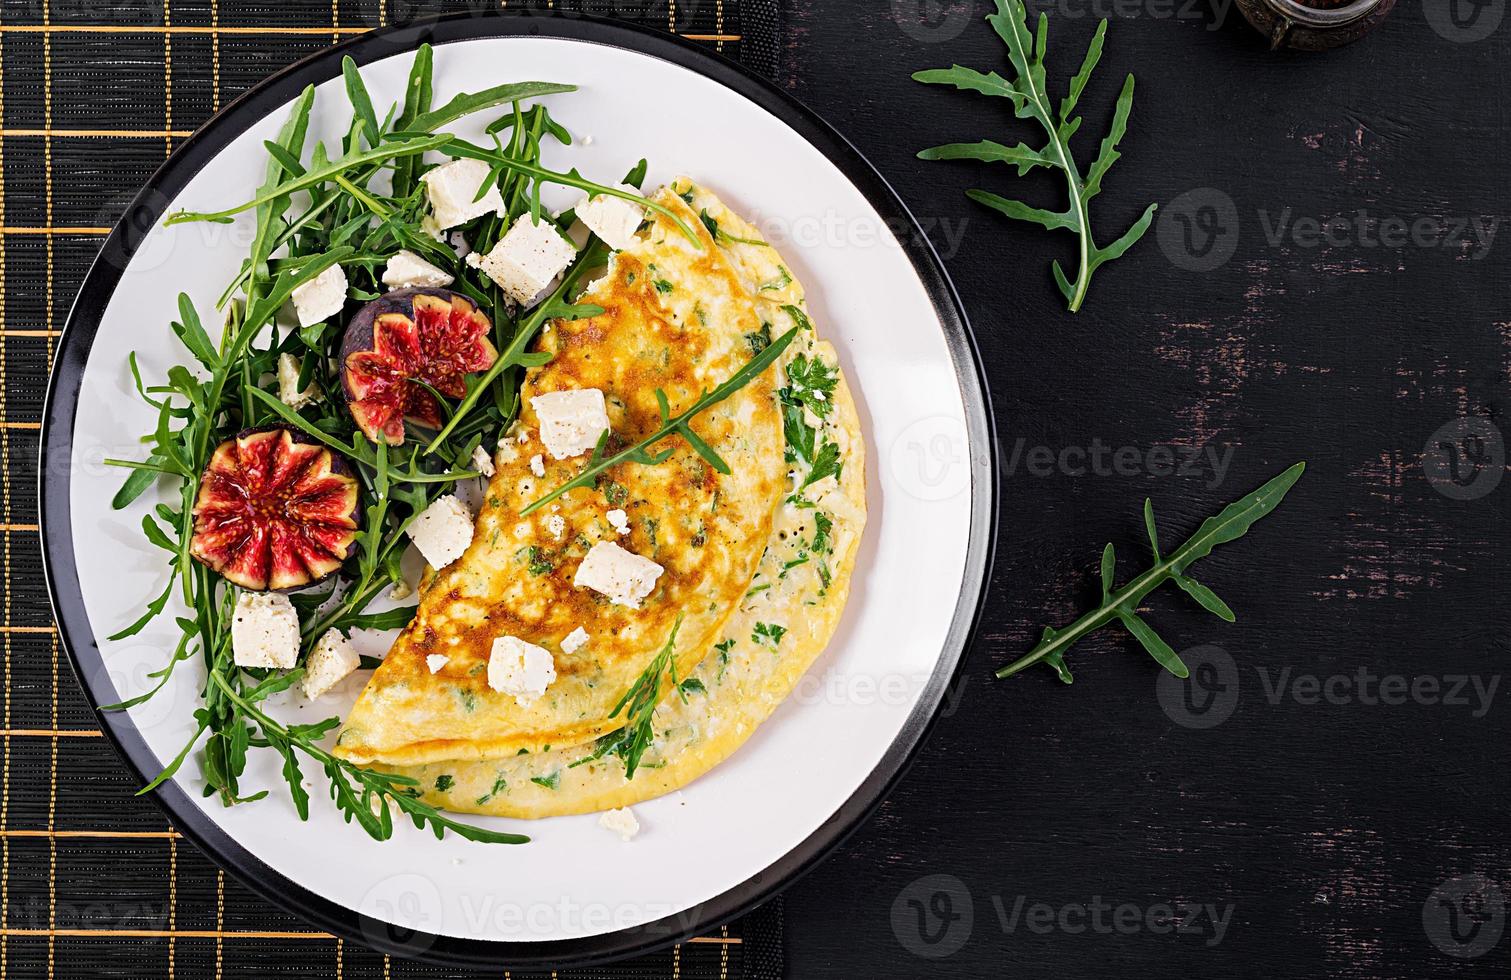 omelet met feta kaas, peterselie en salade met vijgen, rucola Aan wit bord. frittata - Italiaans omelet. top visie. vlak leggen. foto